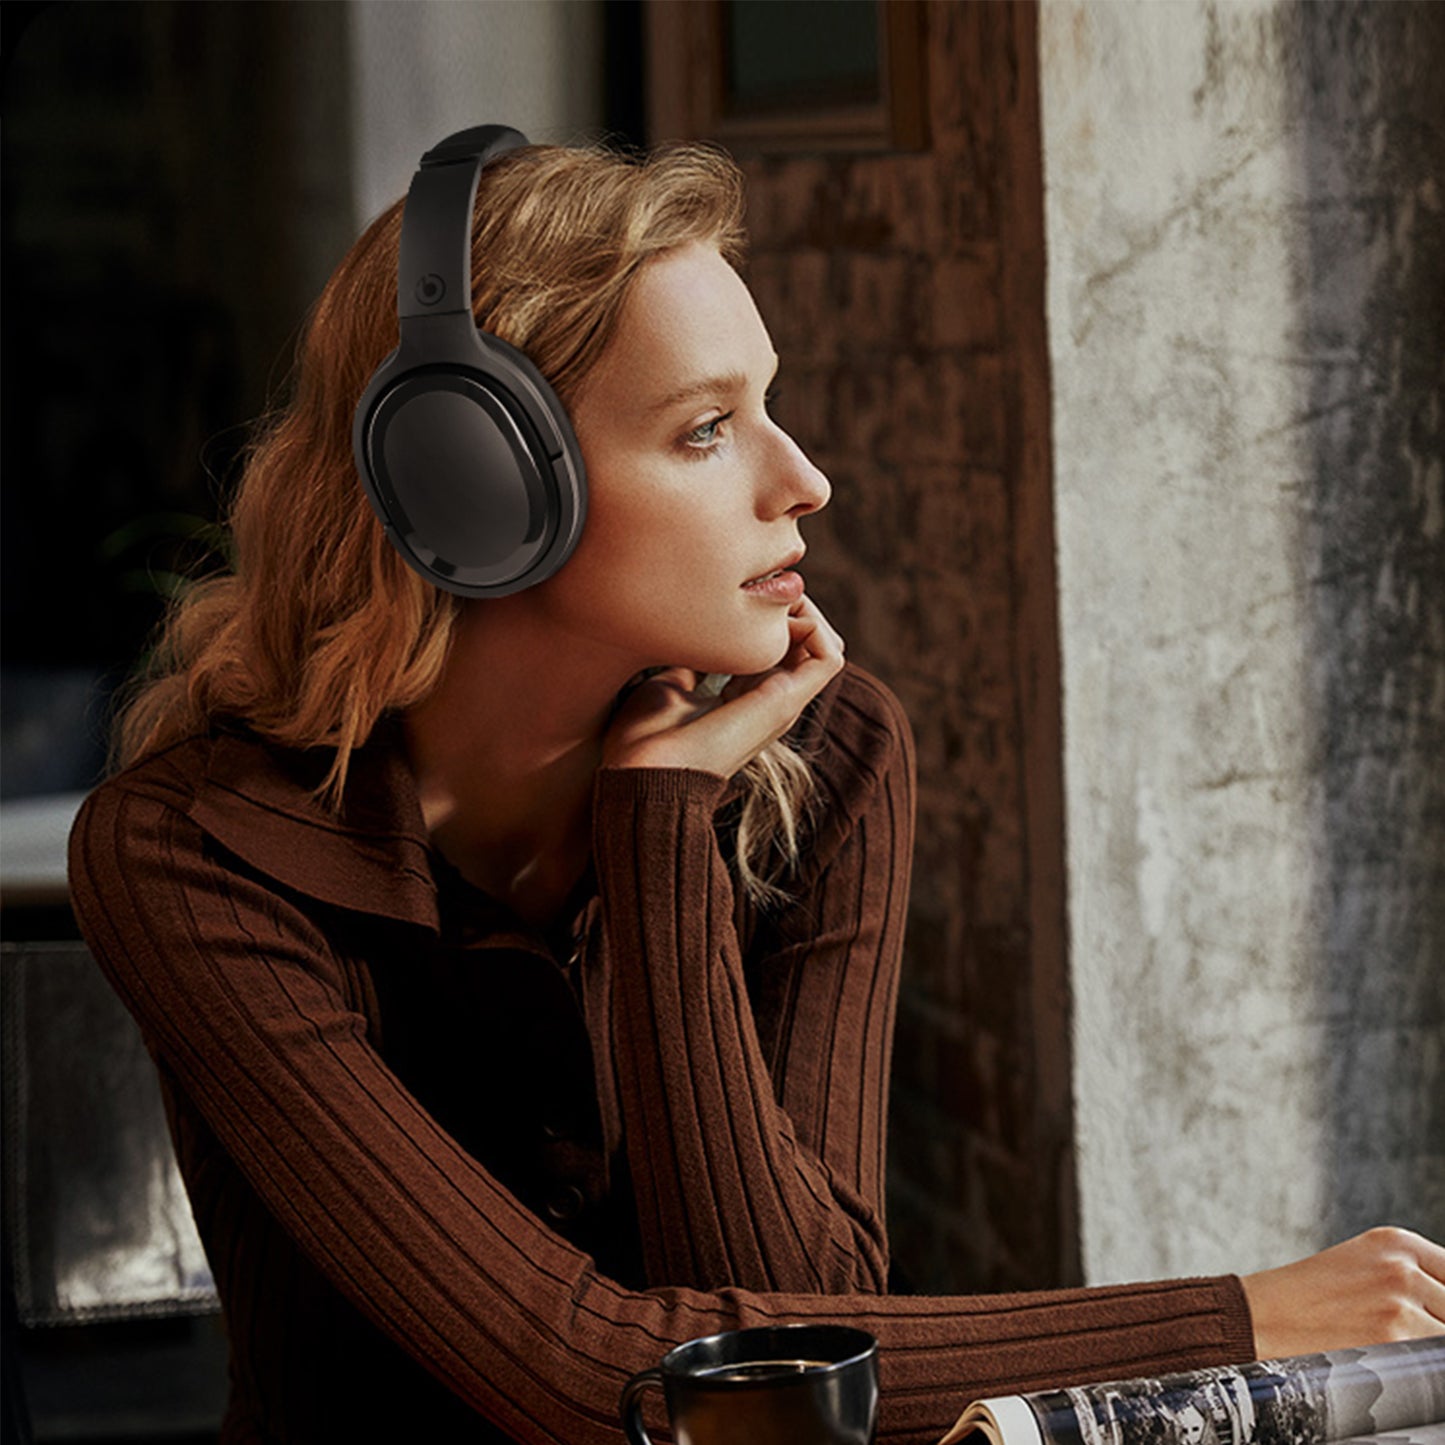 Hybrid Active Noise Cancelling Headphones Wireless Over Ear Bluetooth Deep Bass